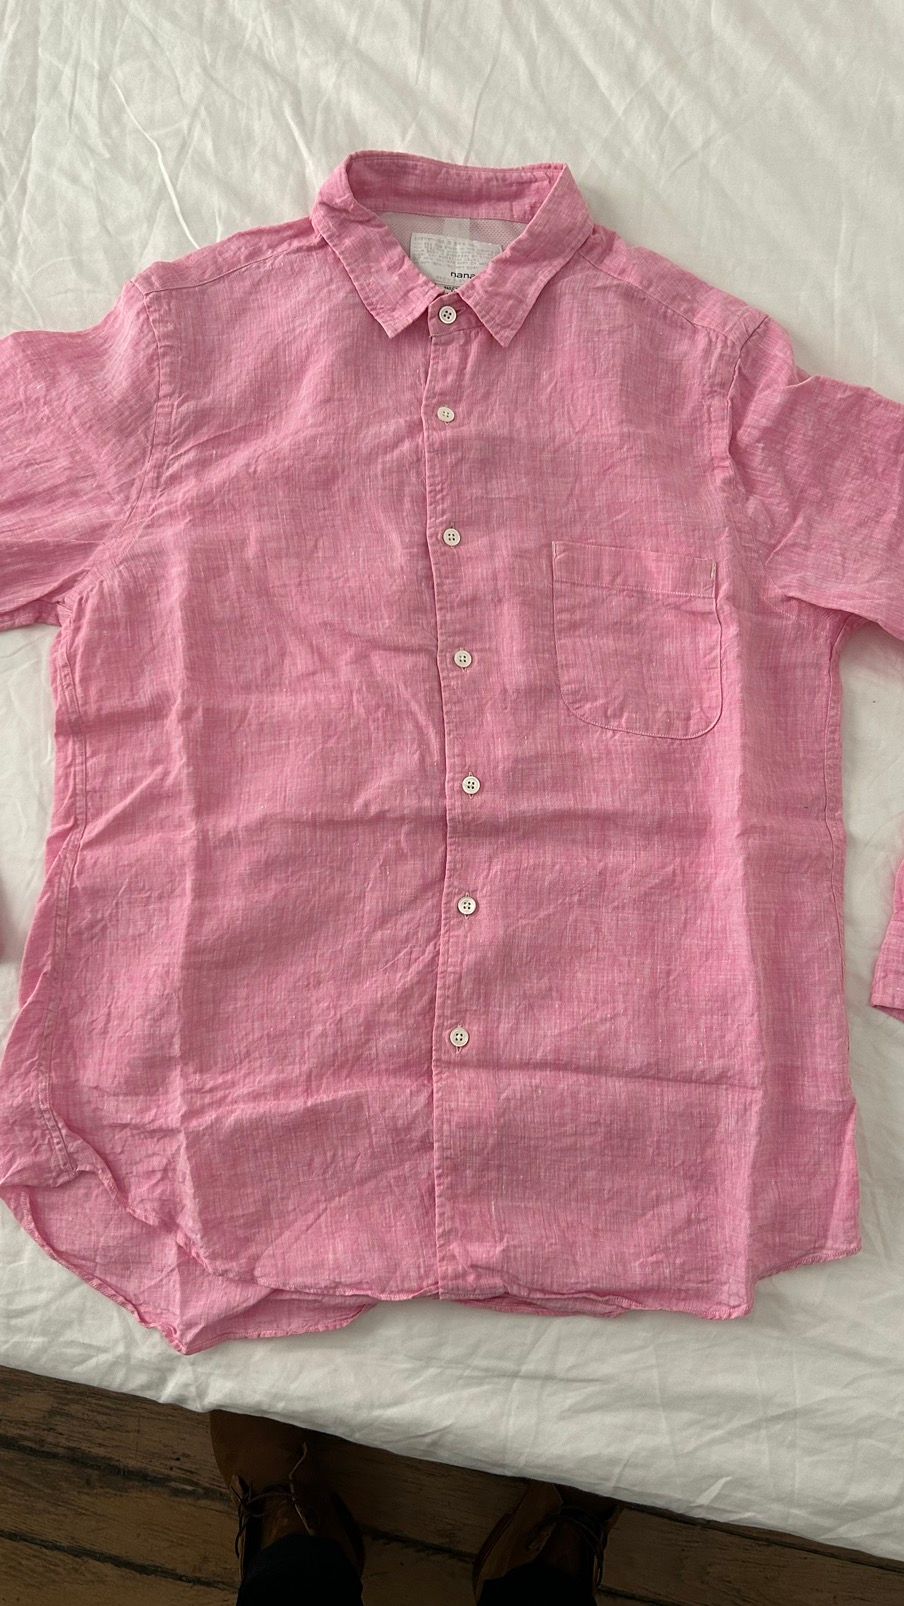 nanamica - 100% linen shirt - medium - made in japan - 2